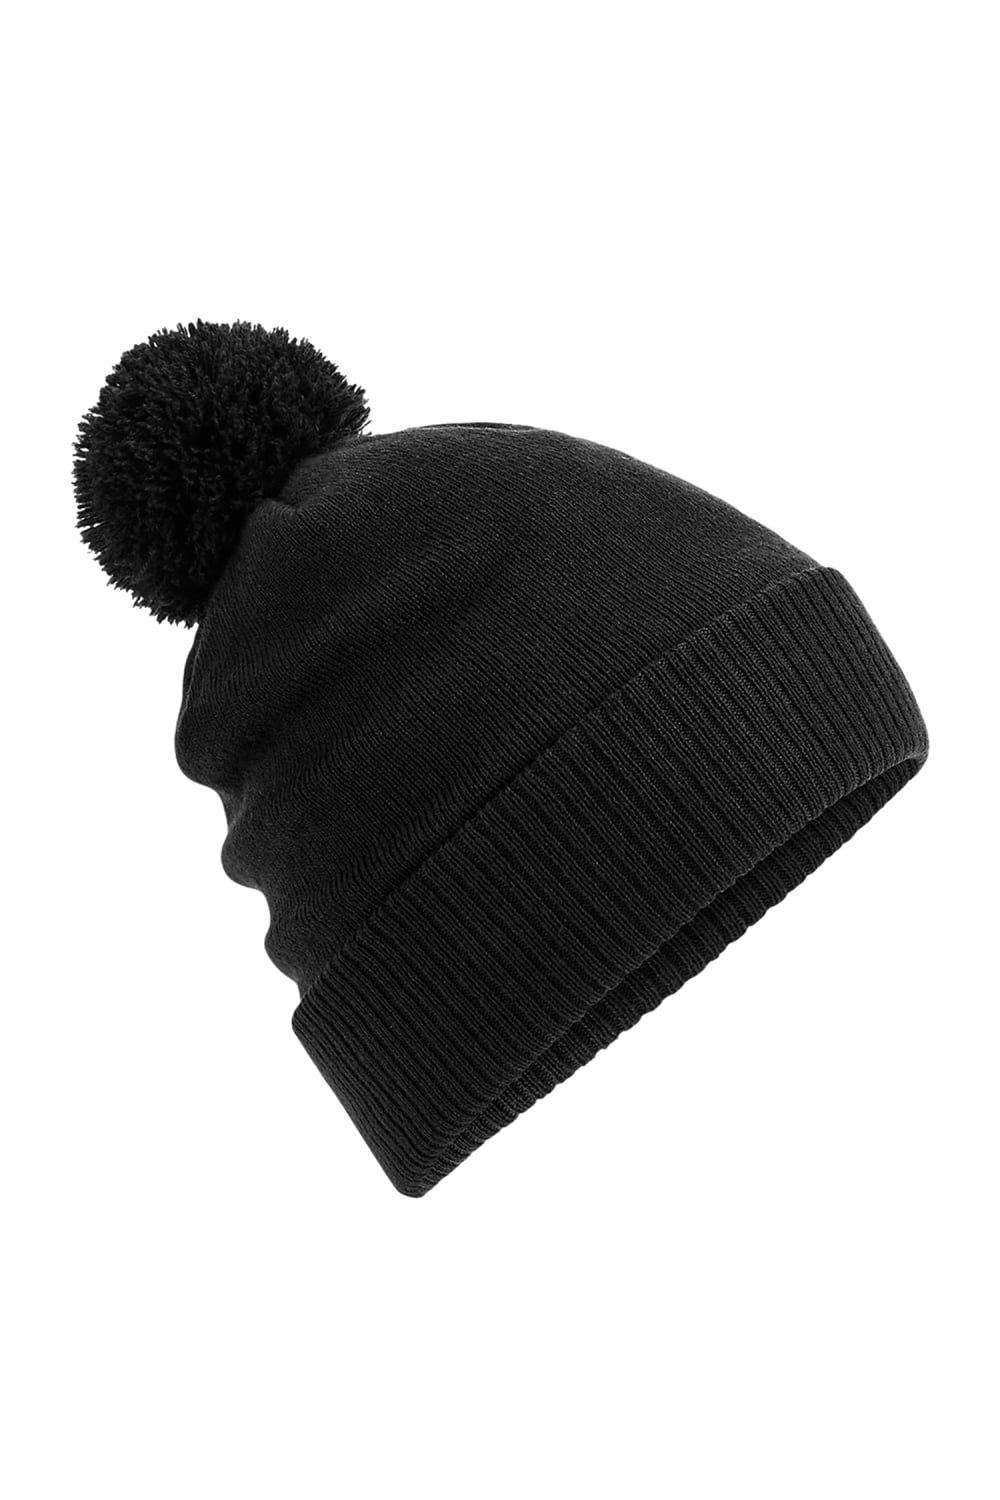 Тепловая шапка Snowstar Beechfield, черный